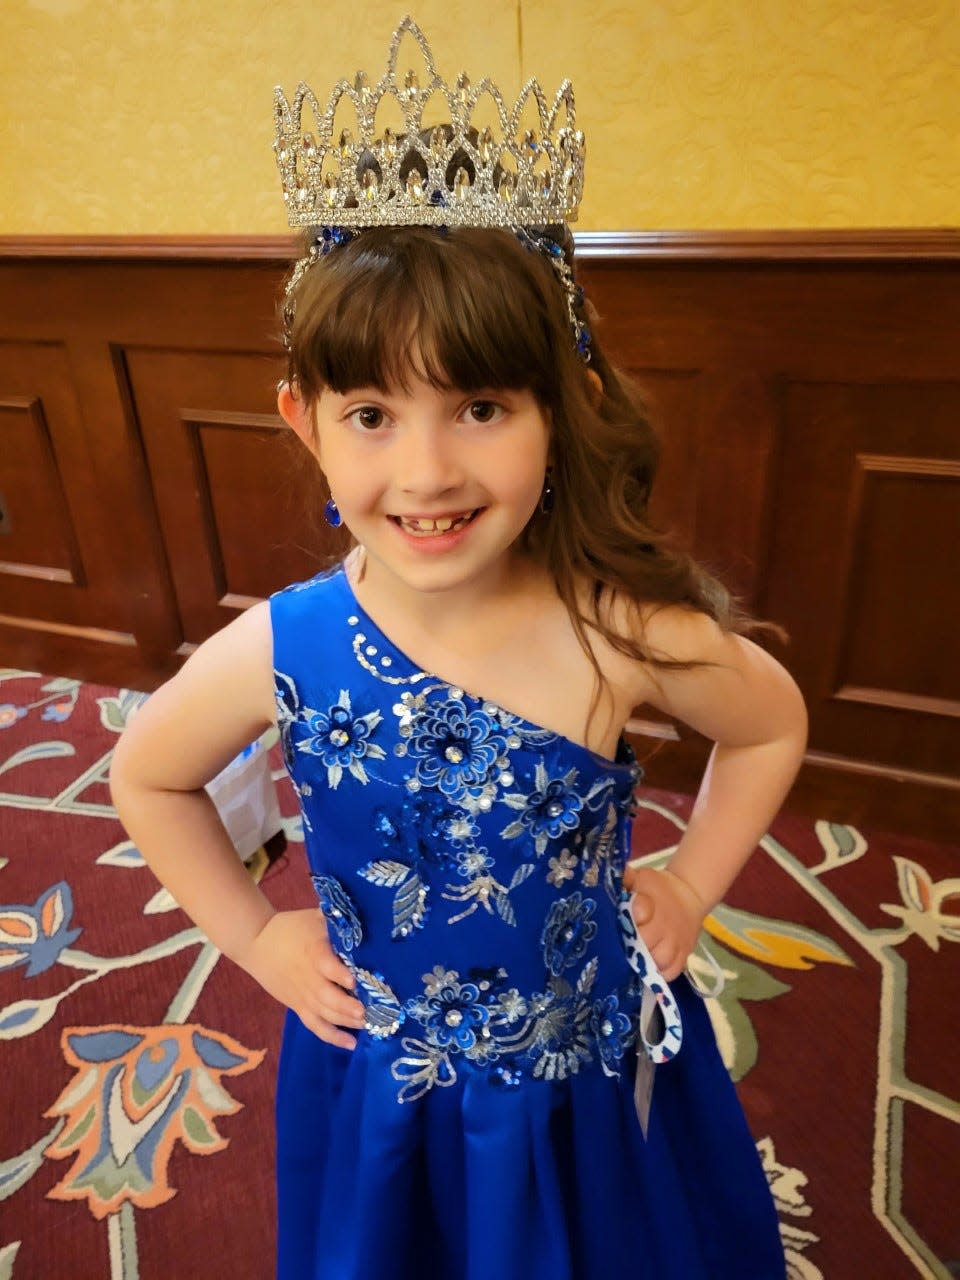 Eight-year-old Eden Victoria Shannon, of Kingston, won the title of Little Miss Massachusetts on March 27.